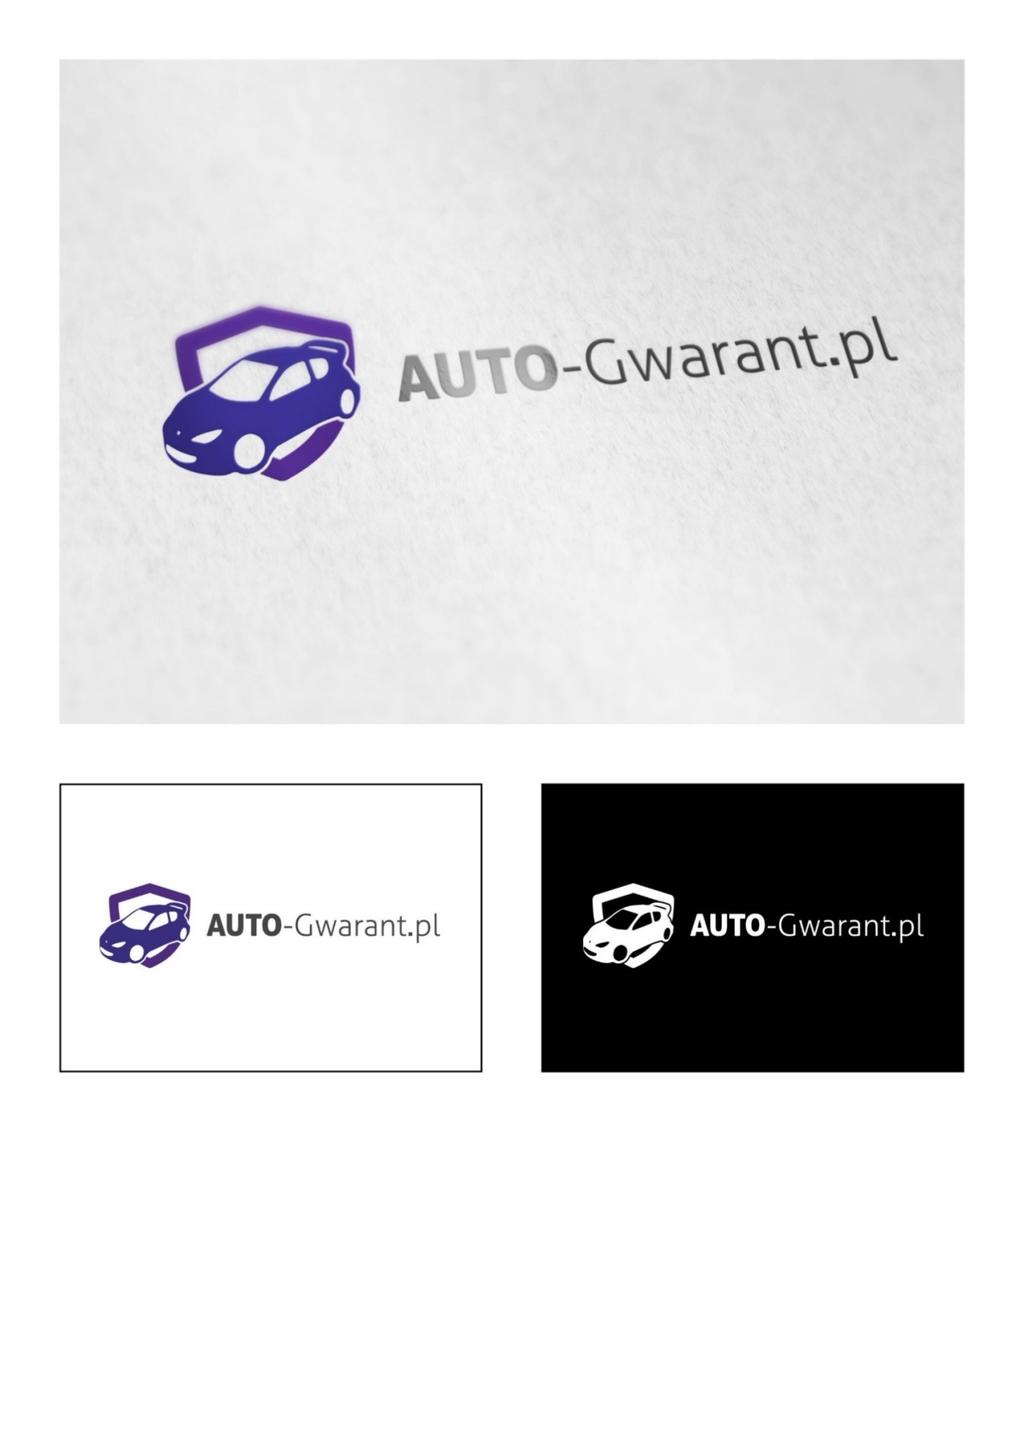 AUTO-Gwarant.